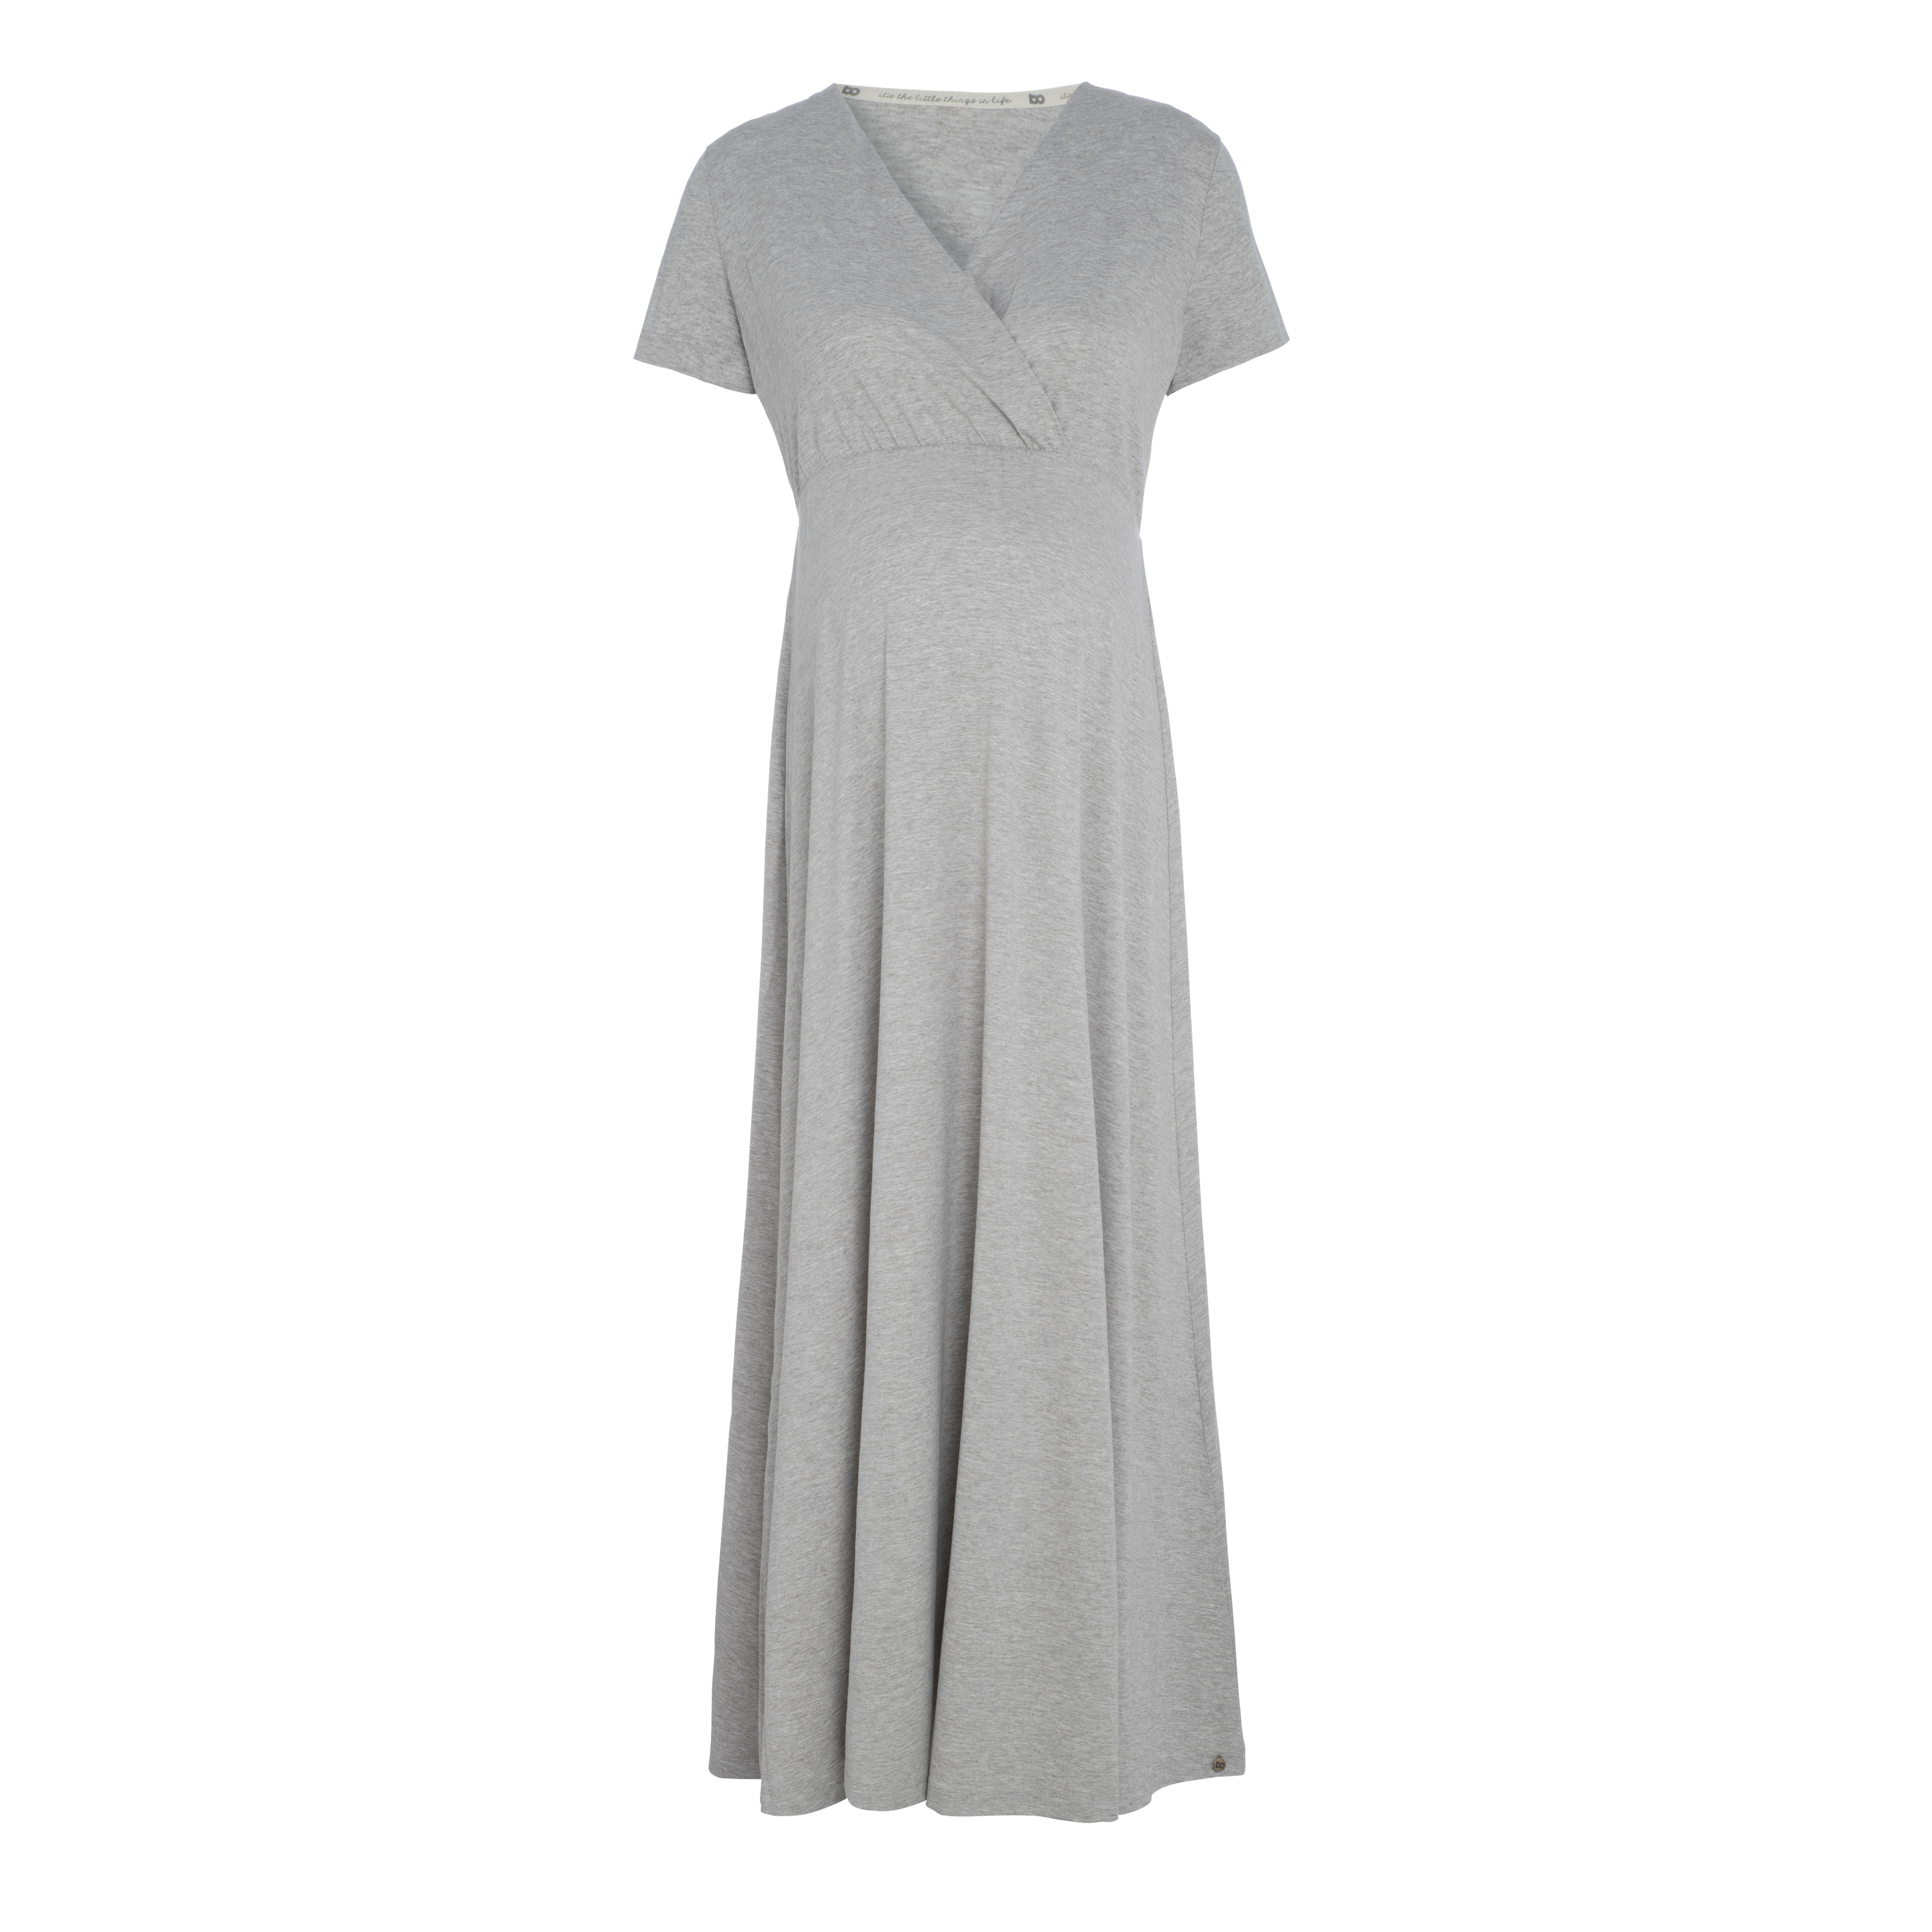 Maternity dress Glow dusty grey - L/XL - With nursing function